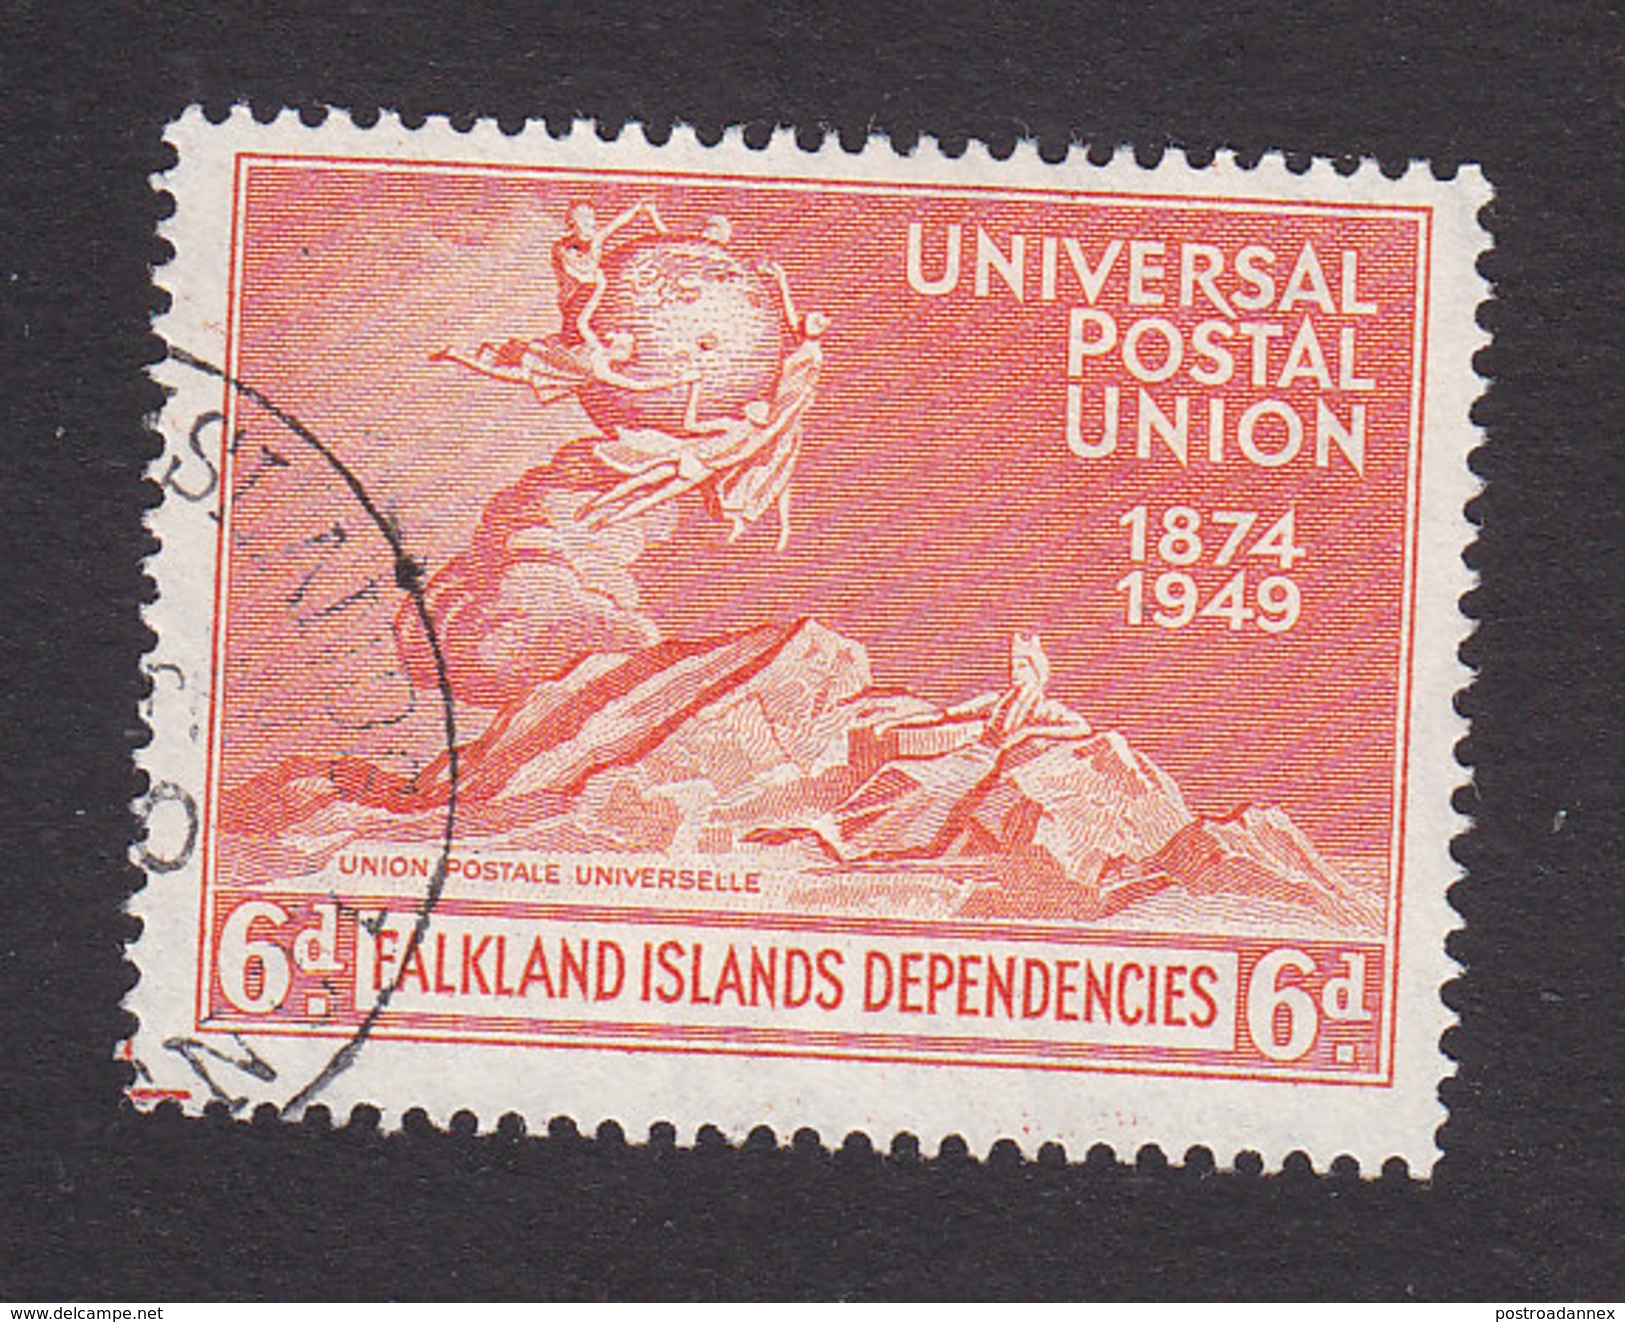 Falkland Islands Dependencies, Scott #1L17, Used, UPU, Issued 1949 - Falkland Islands